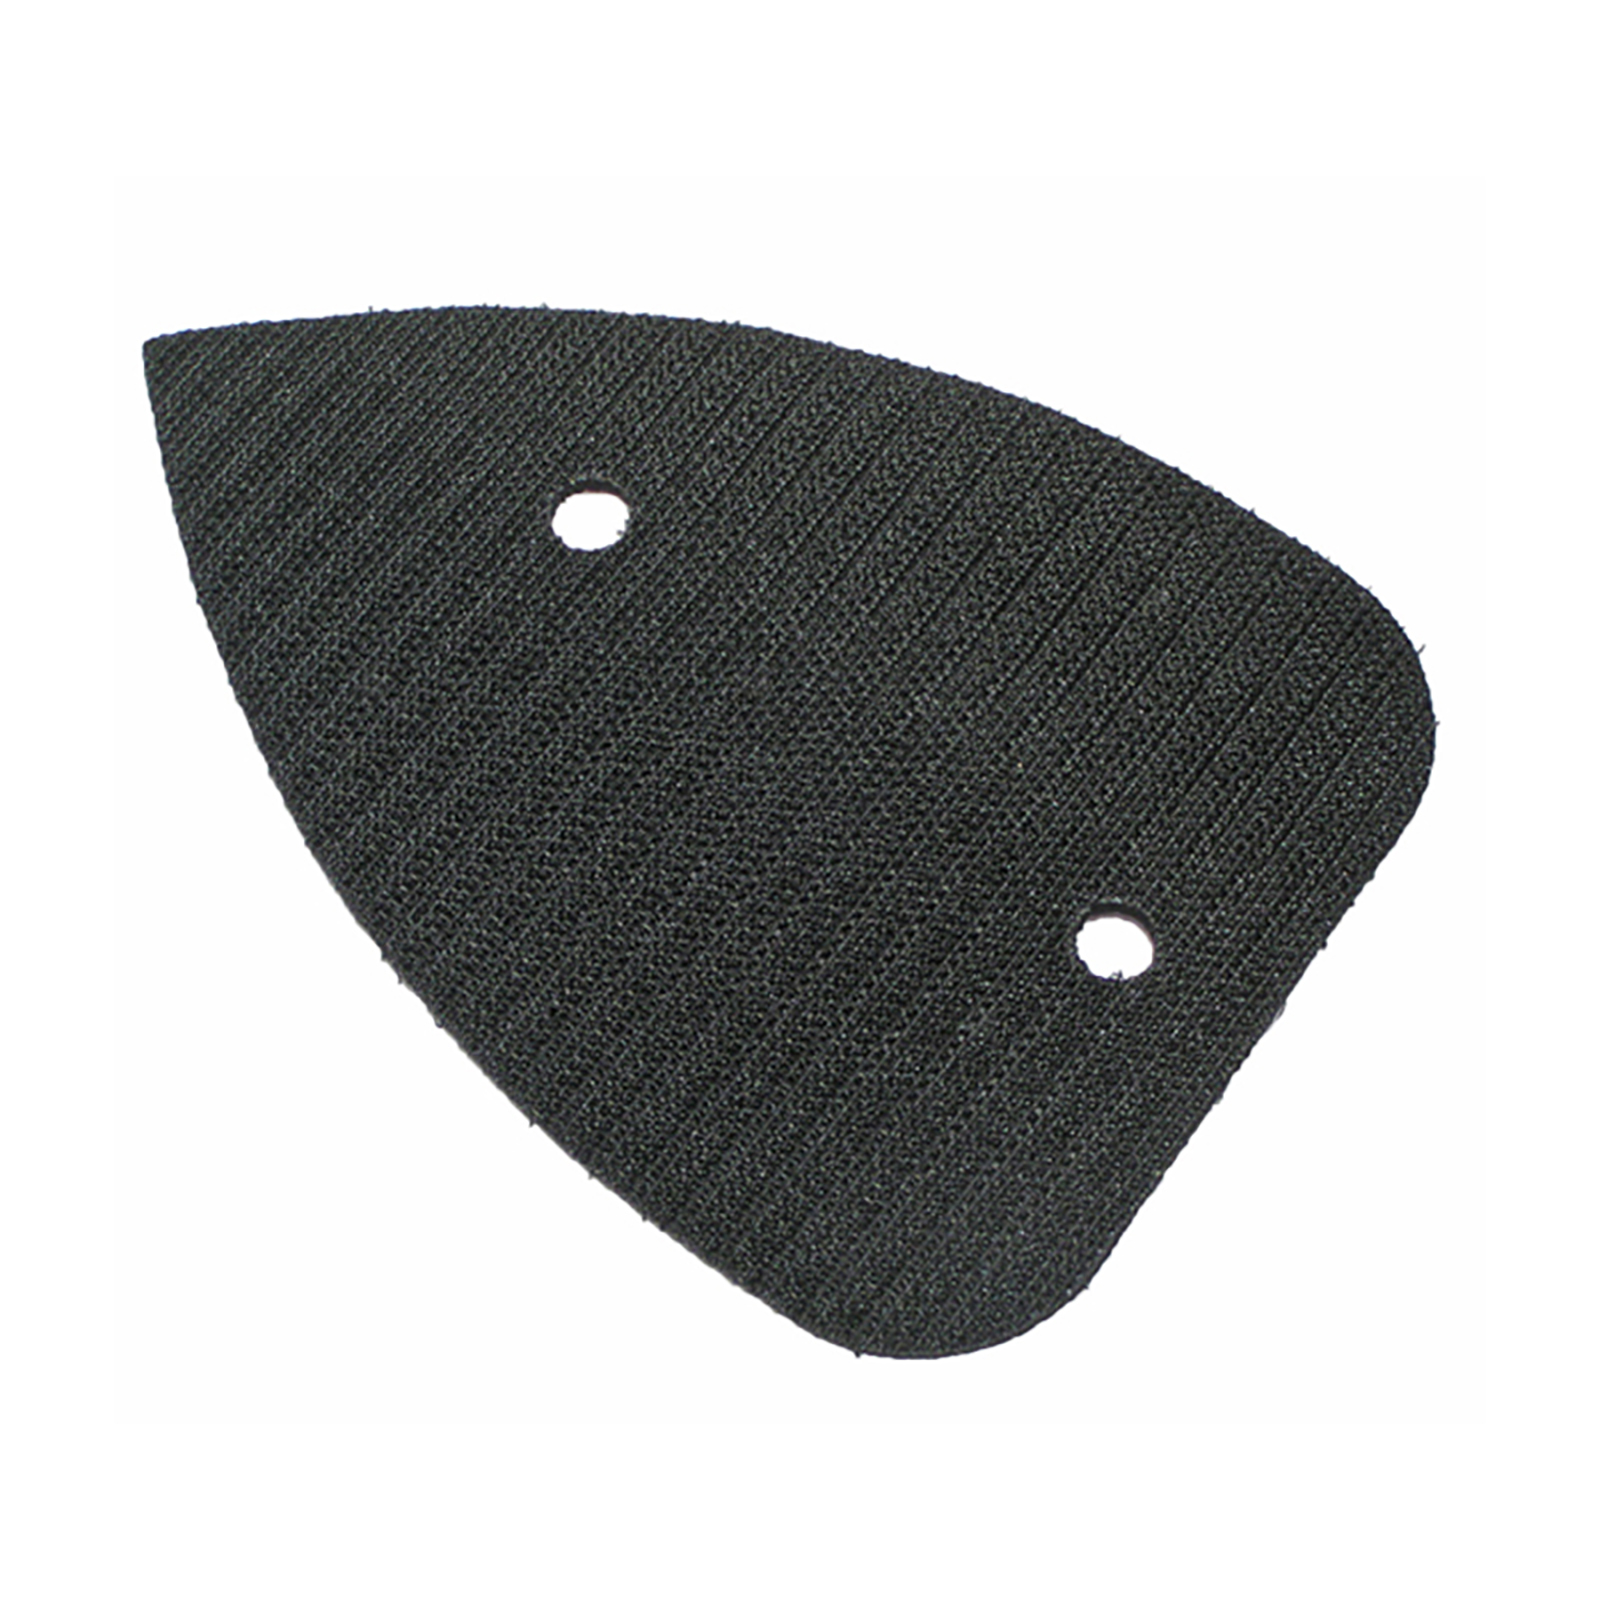 BLACK+DECKER 577044-01 Mouse Sander Replacement Sanding Pad